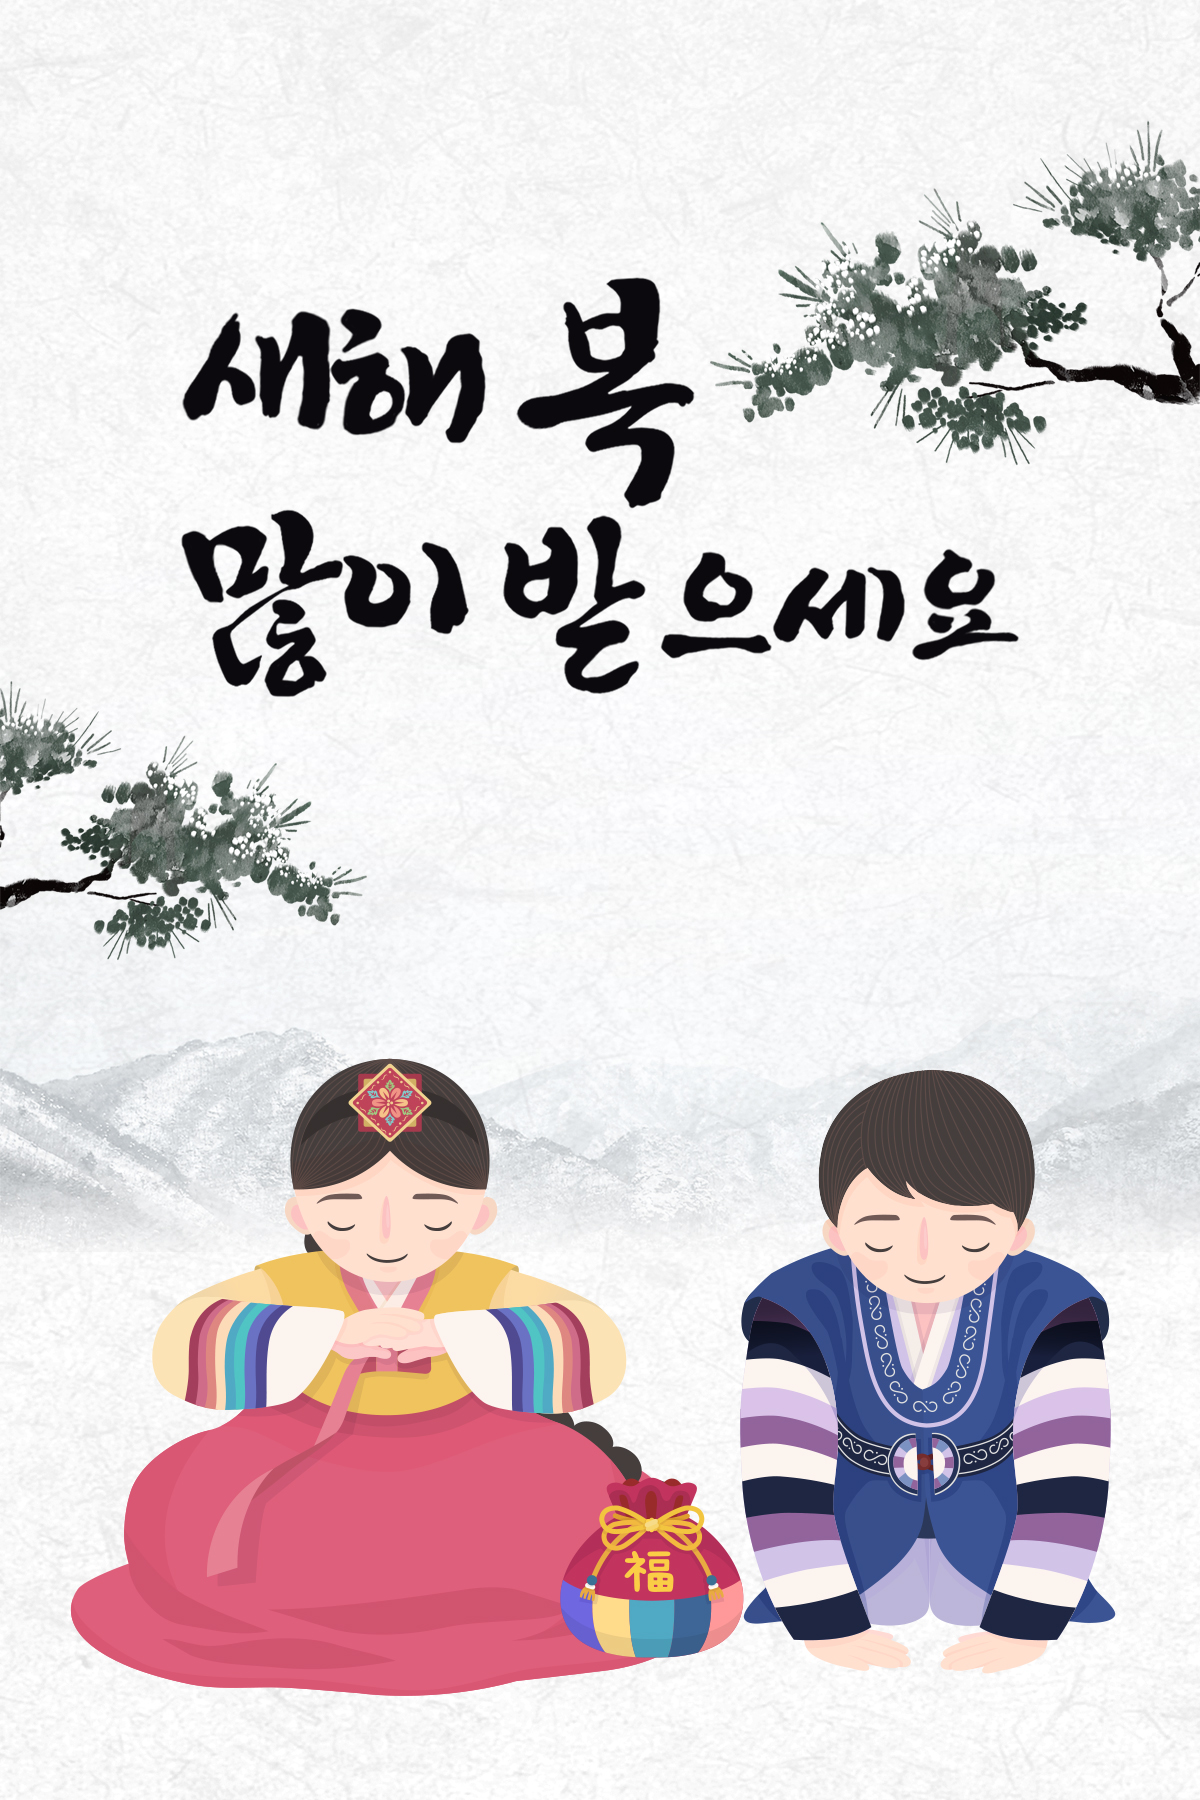 [Jan] Korea celebrates Seollal – Lunar New Year Photo